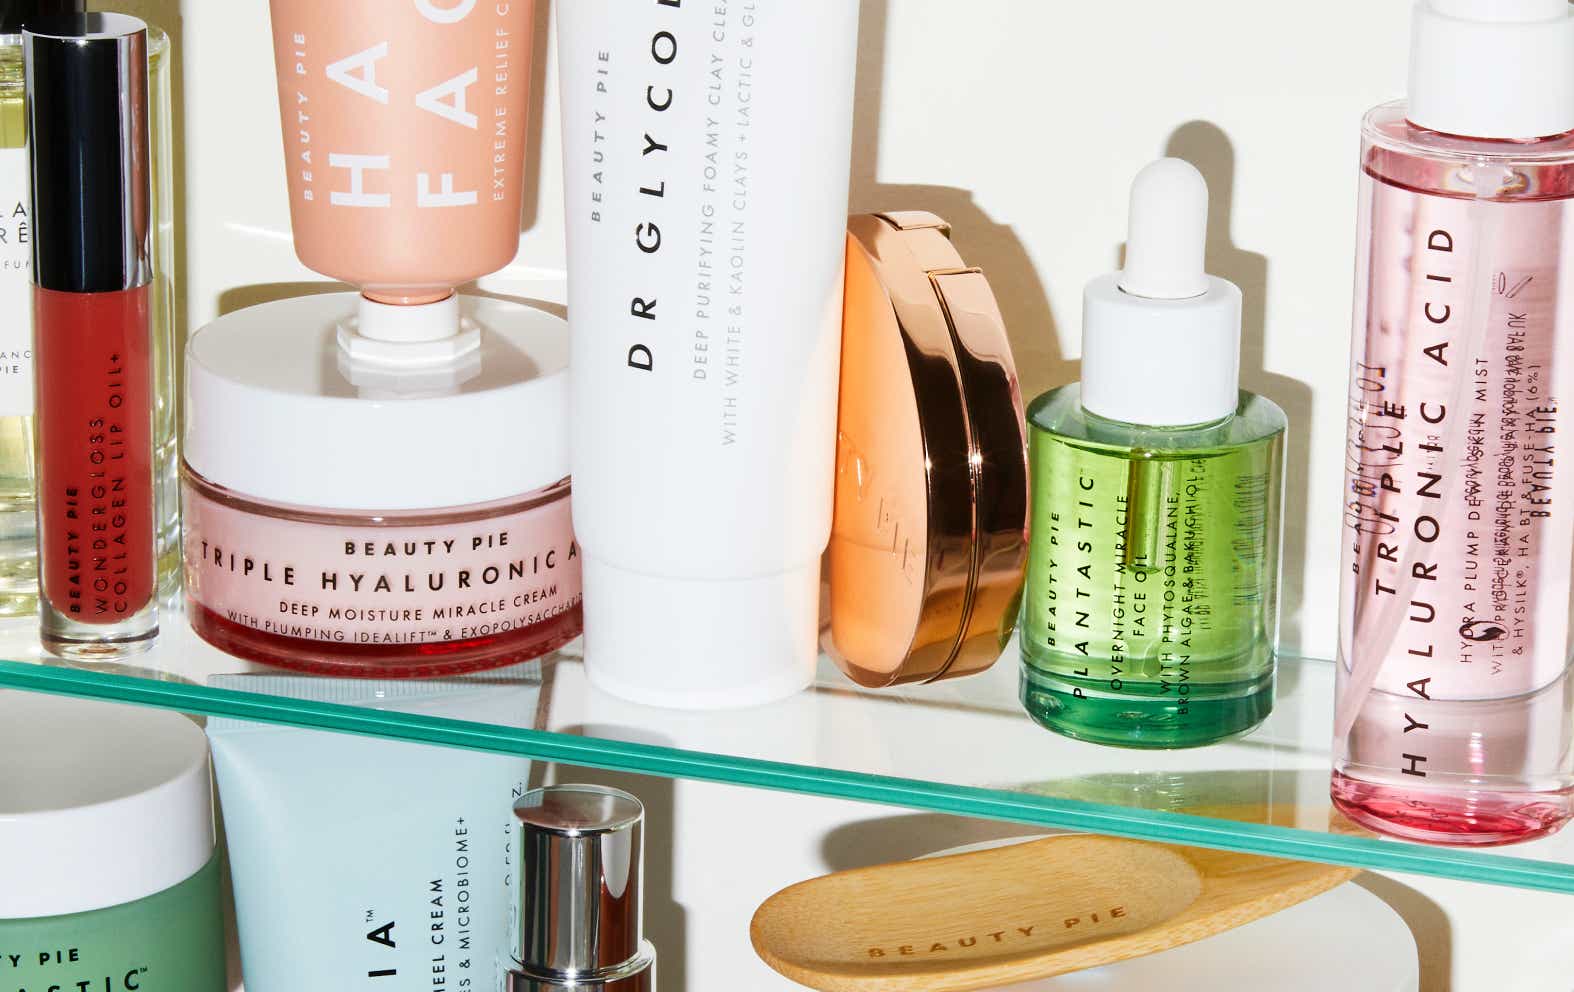 Beauty Pie products on a medicine cabinet shelf